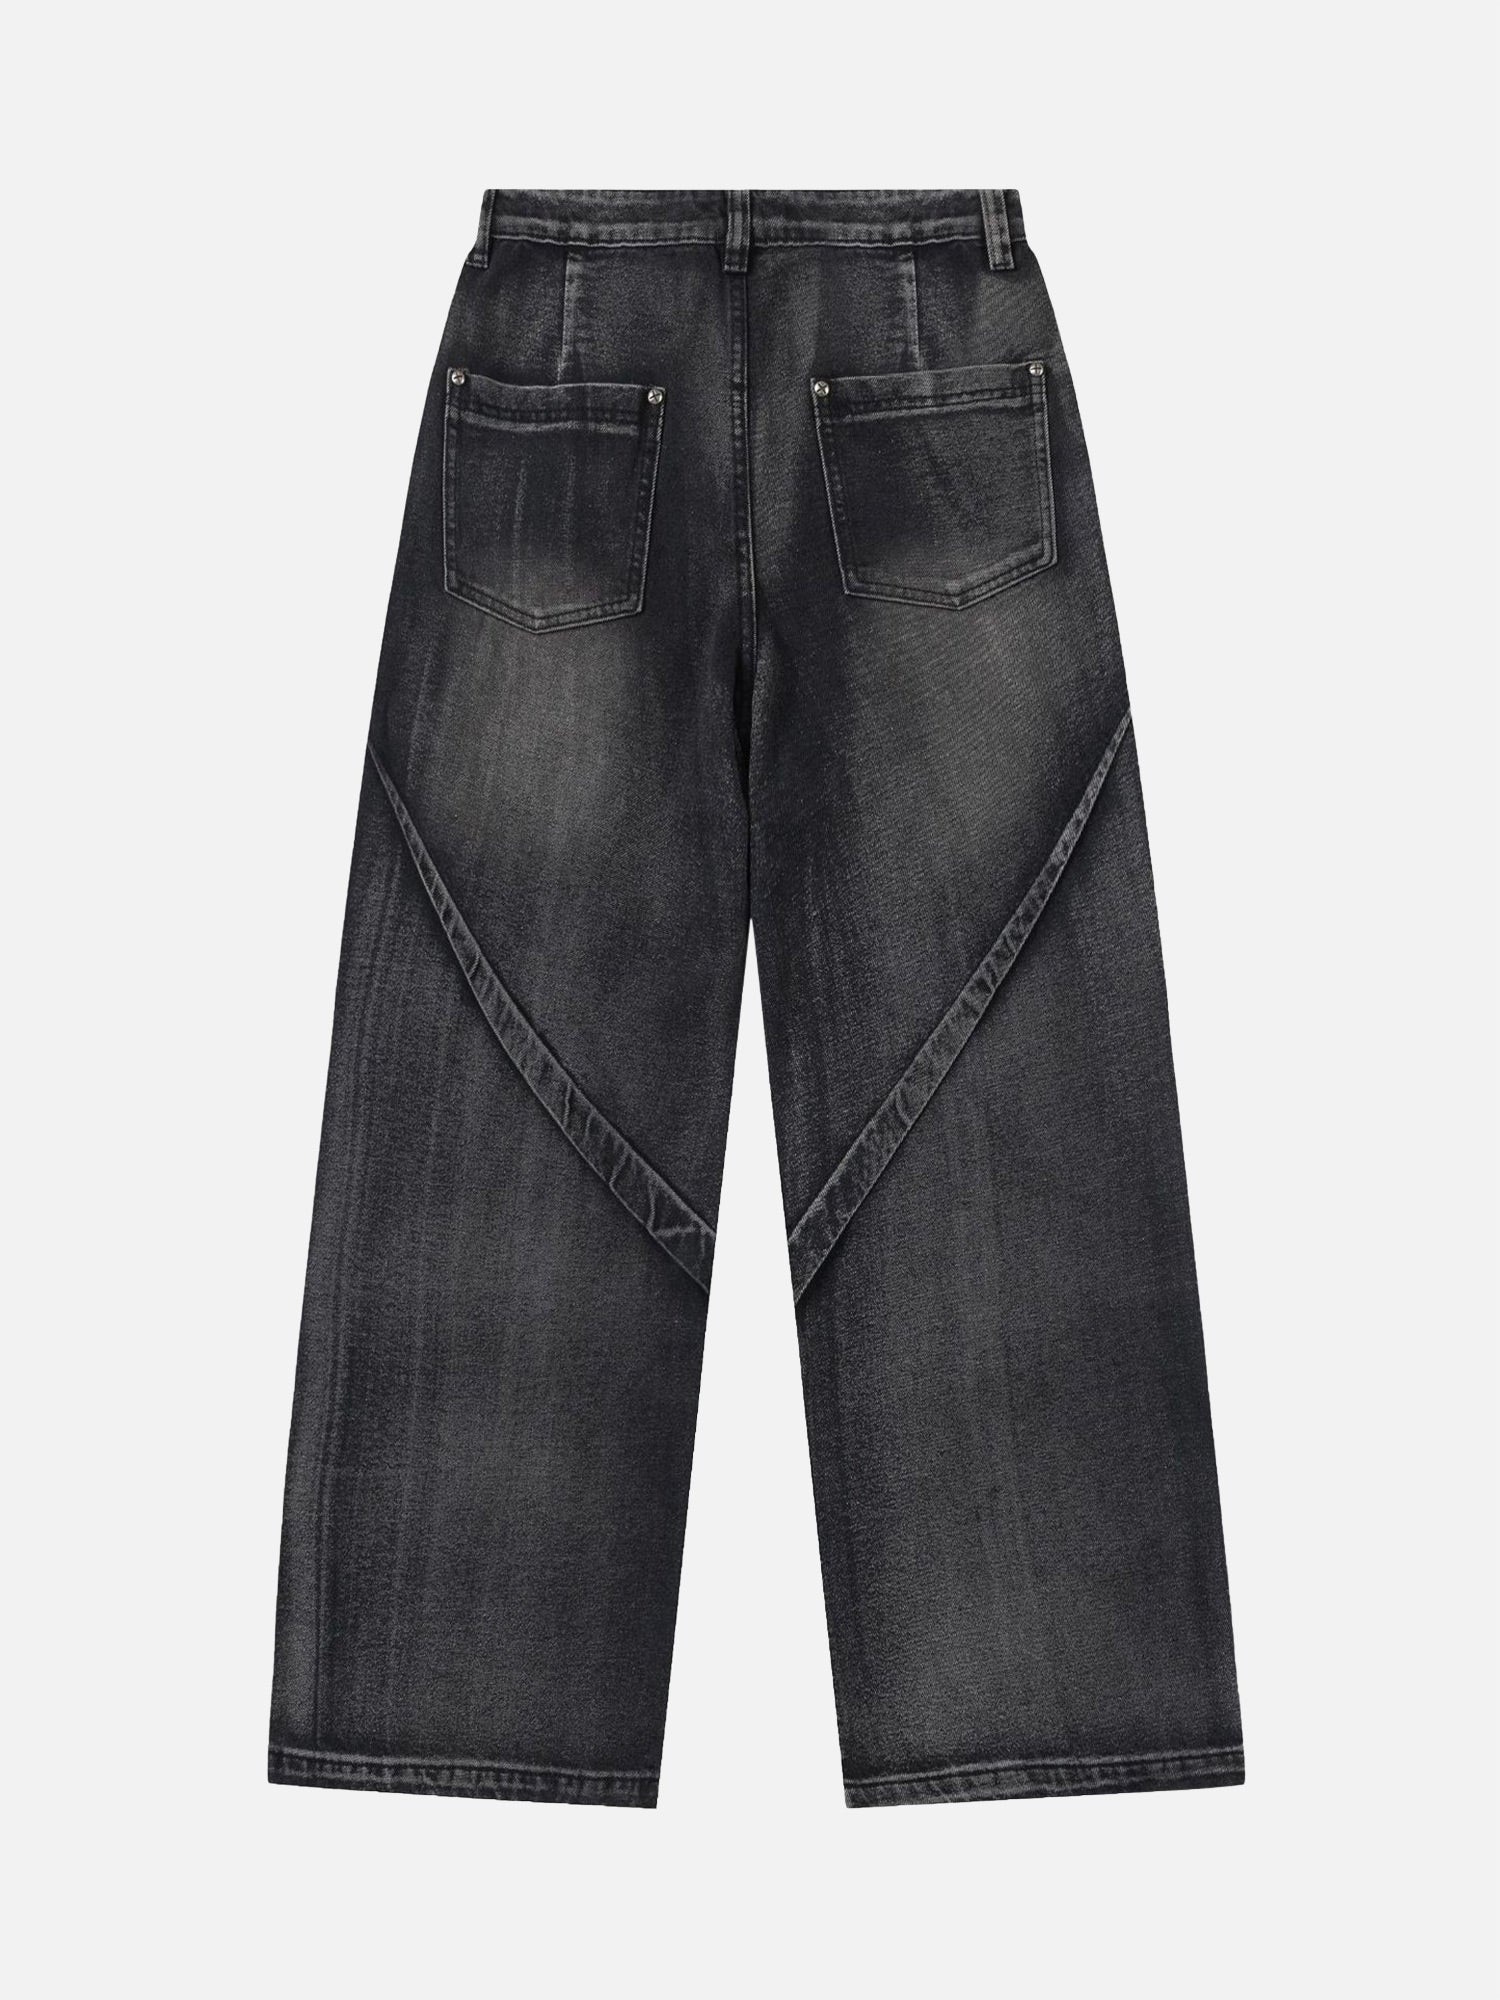 Thesupermade Beautiful Niche Design Multi-pleat Retro Jeans